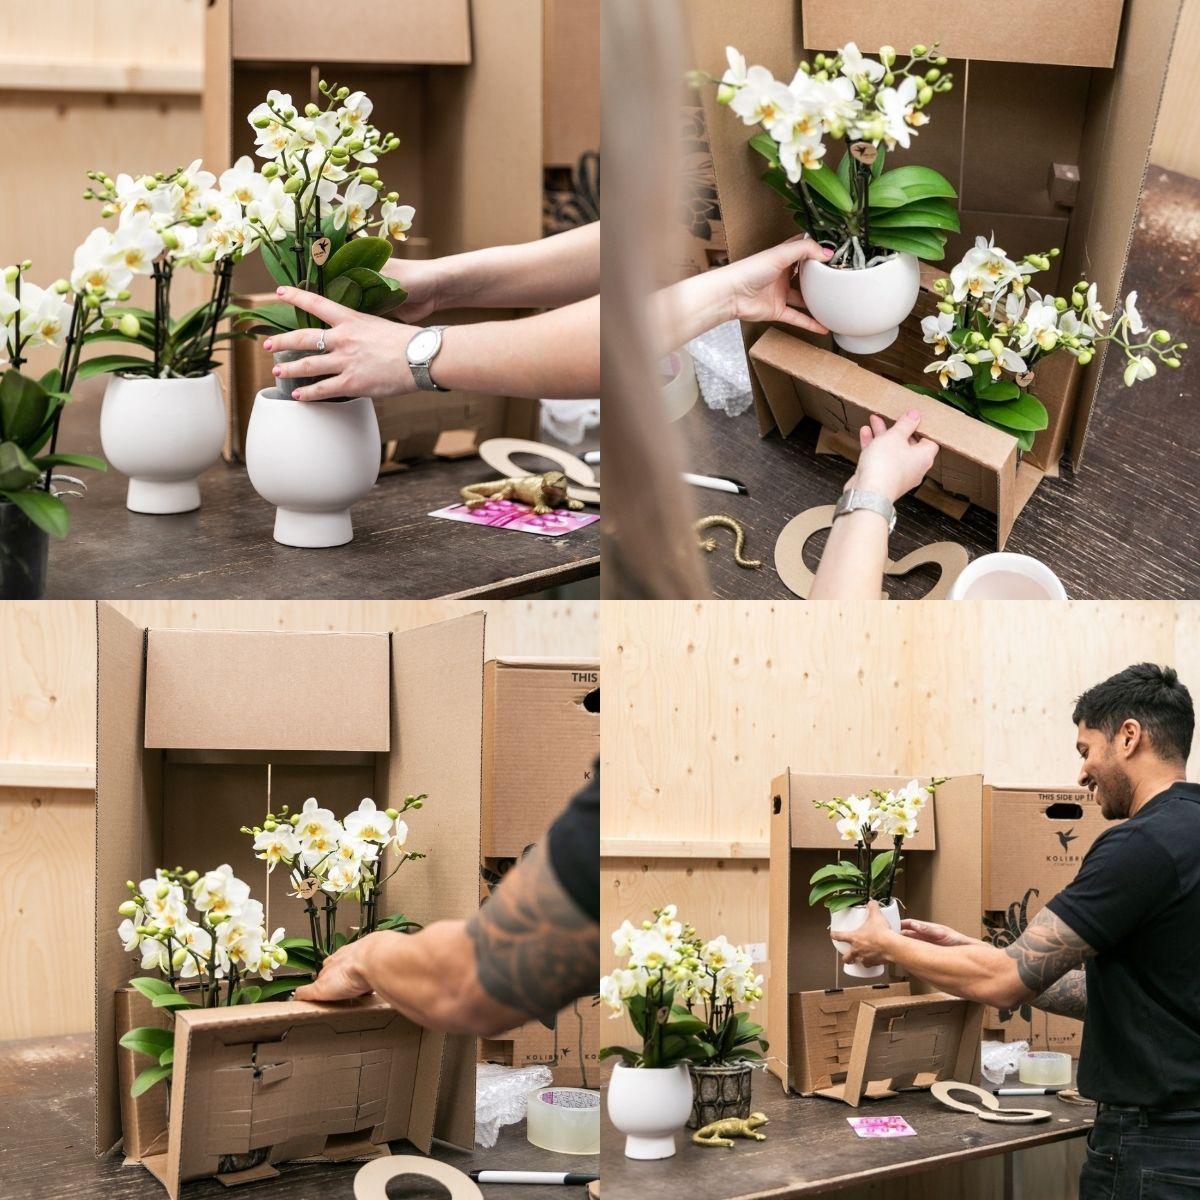 Kolibri Orchids | witte orchideeënset in Reed Basket incl. waterreservoir | drie witte orchideeën Ghent 12cm | Mono Bouquet wit met zelfvoorzienend waterreservoir.